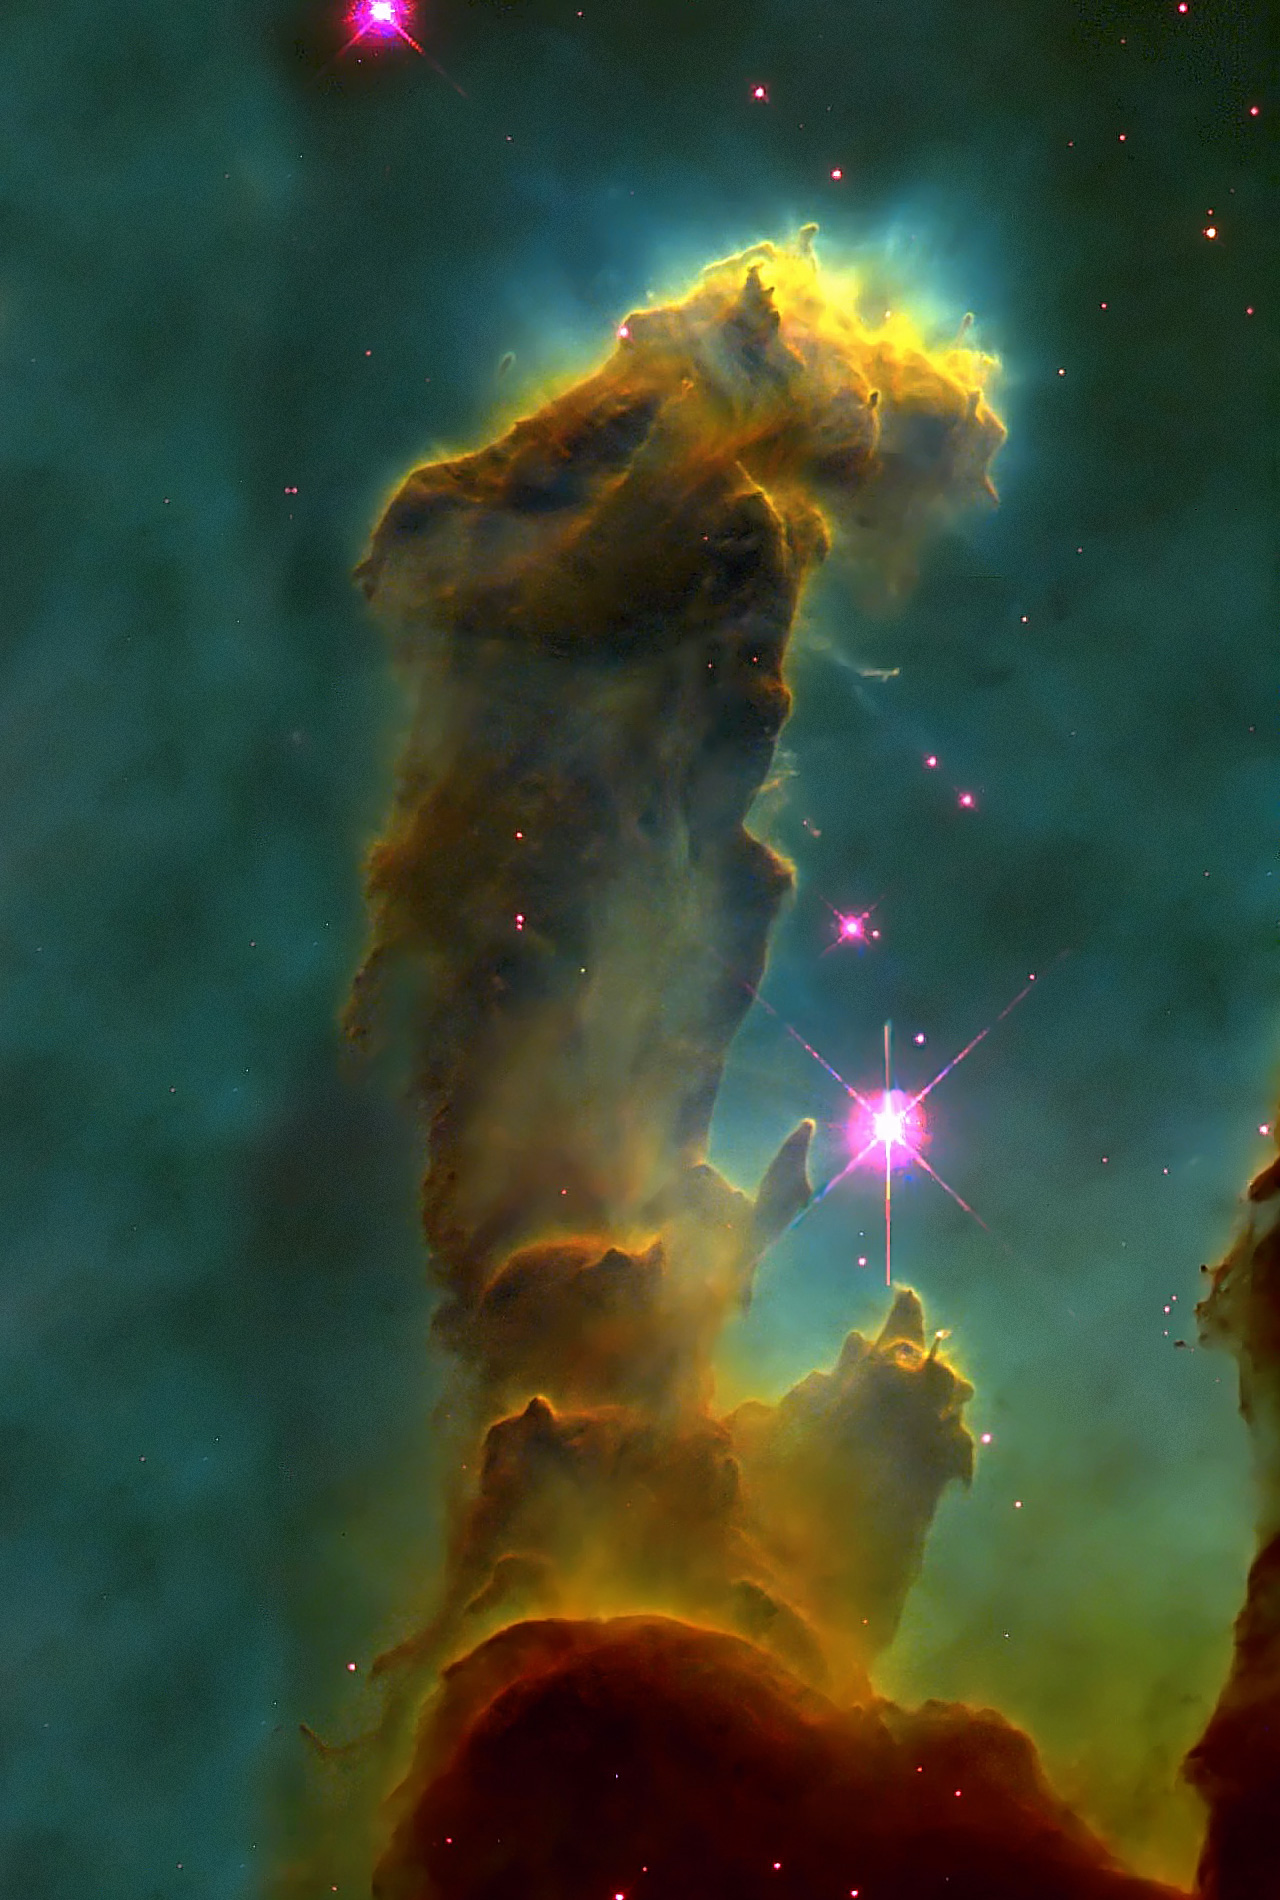 Eagle Nebula Pillars Famous Hubble Photograph photoshopped